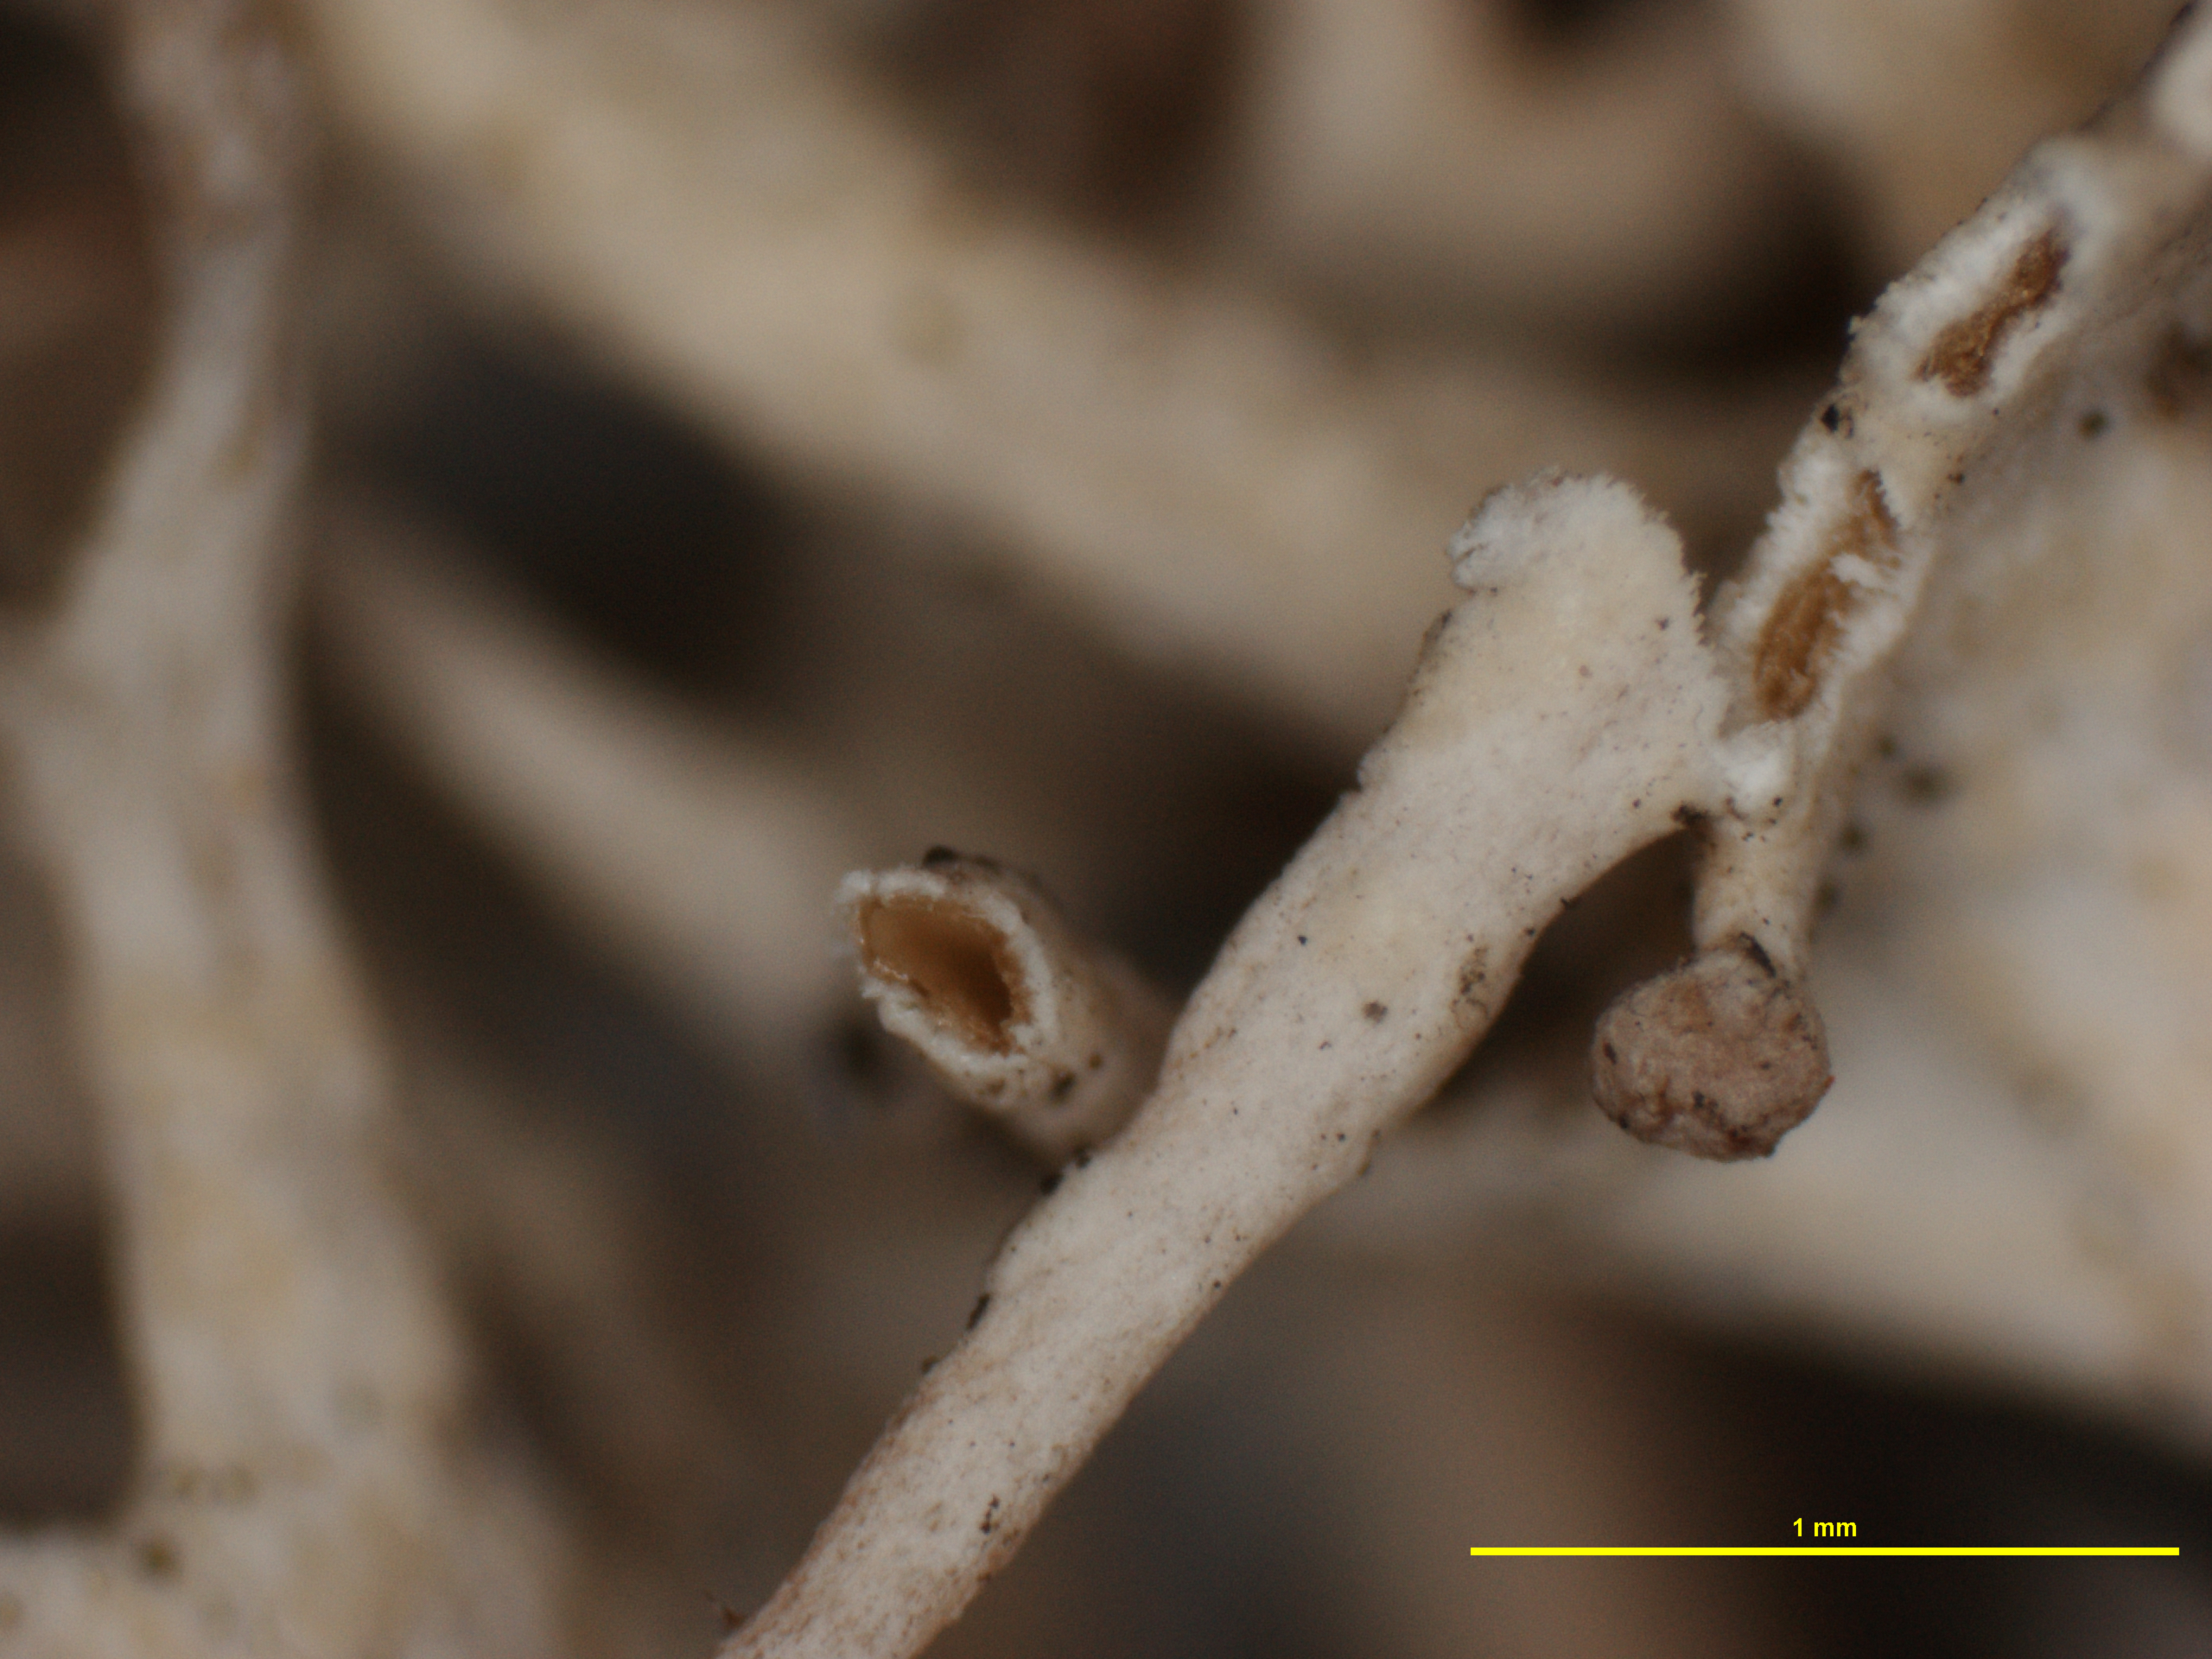 Cladonia dissecta image